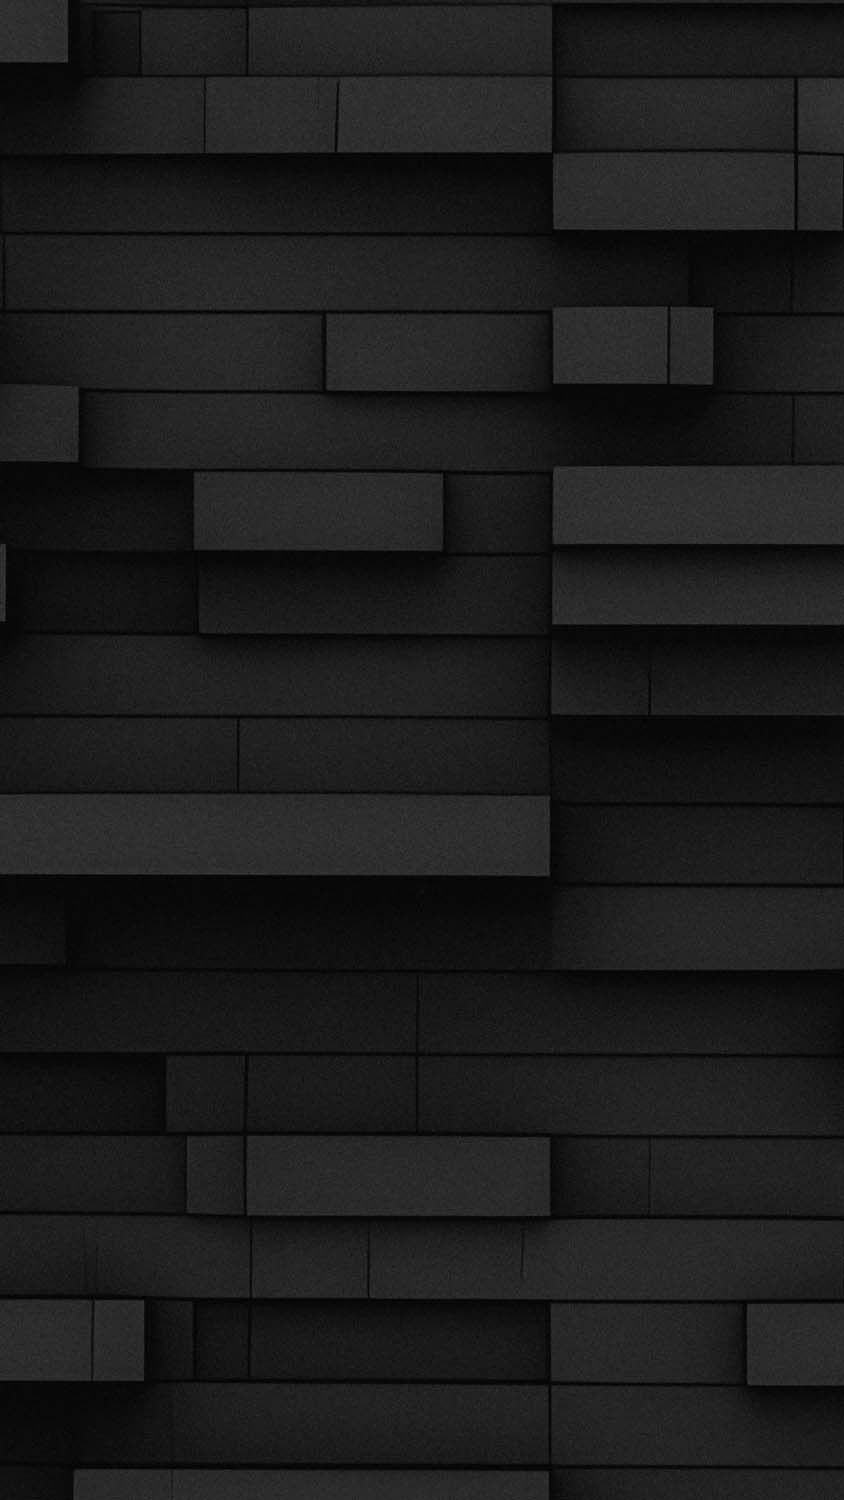 3D Black Tiles iPhone Wallpaper 4K